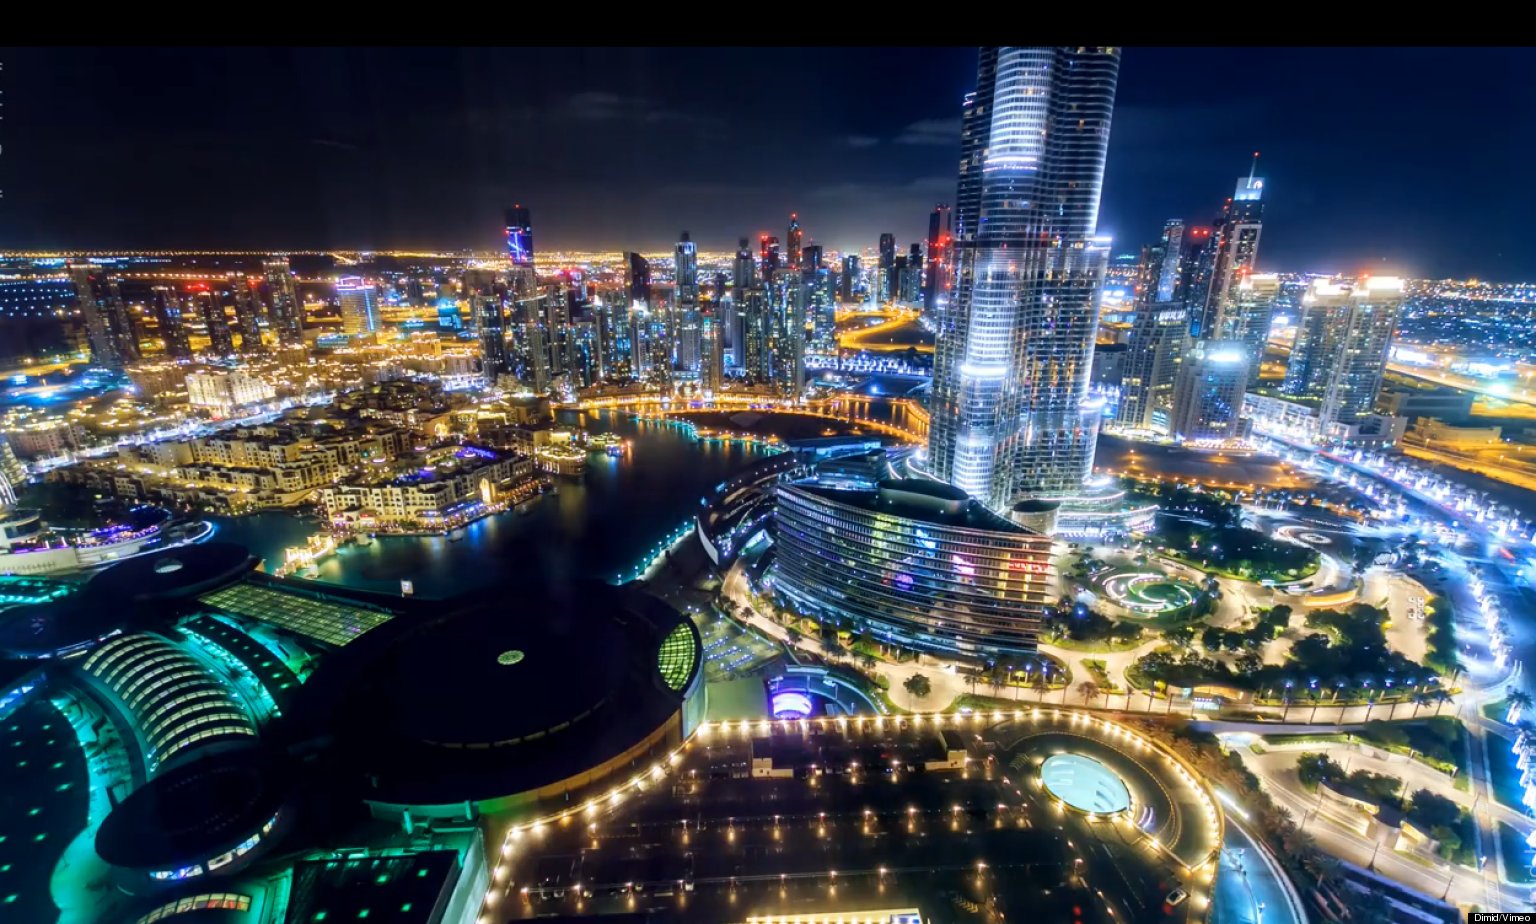 The story behind Dubai’s tech short of 2016